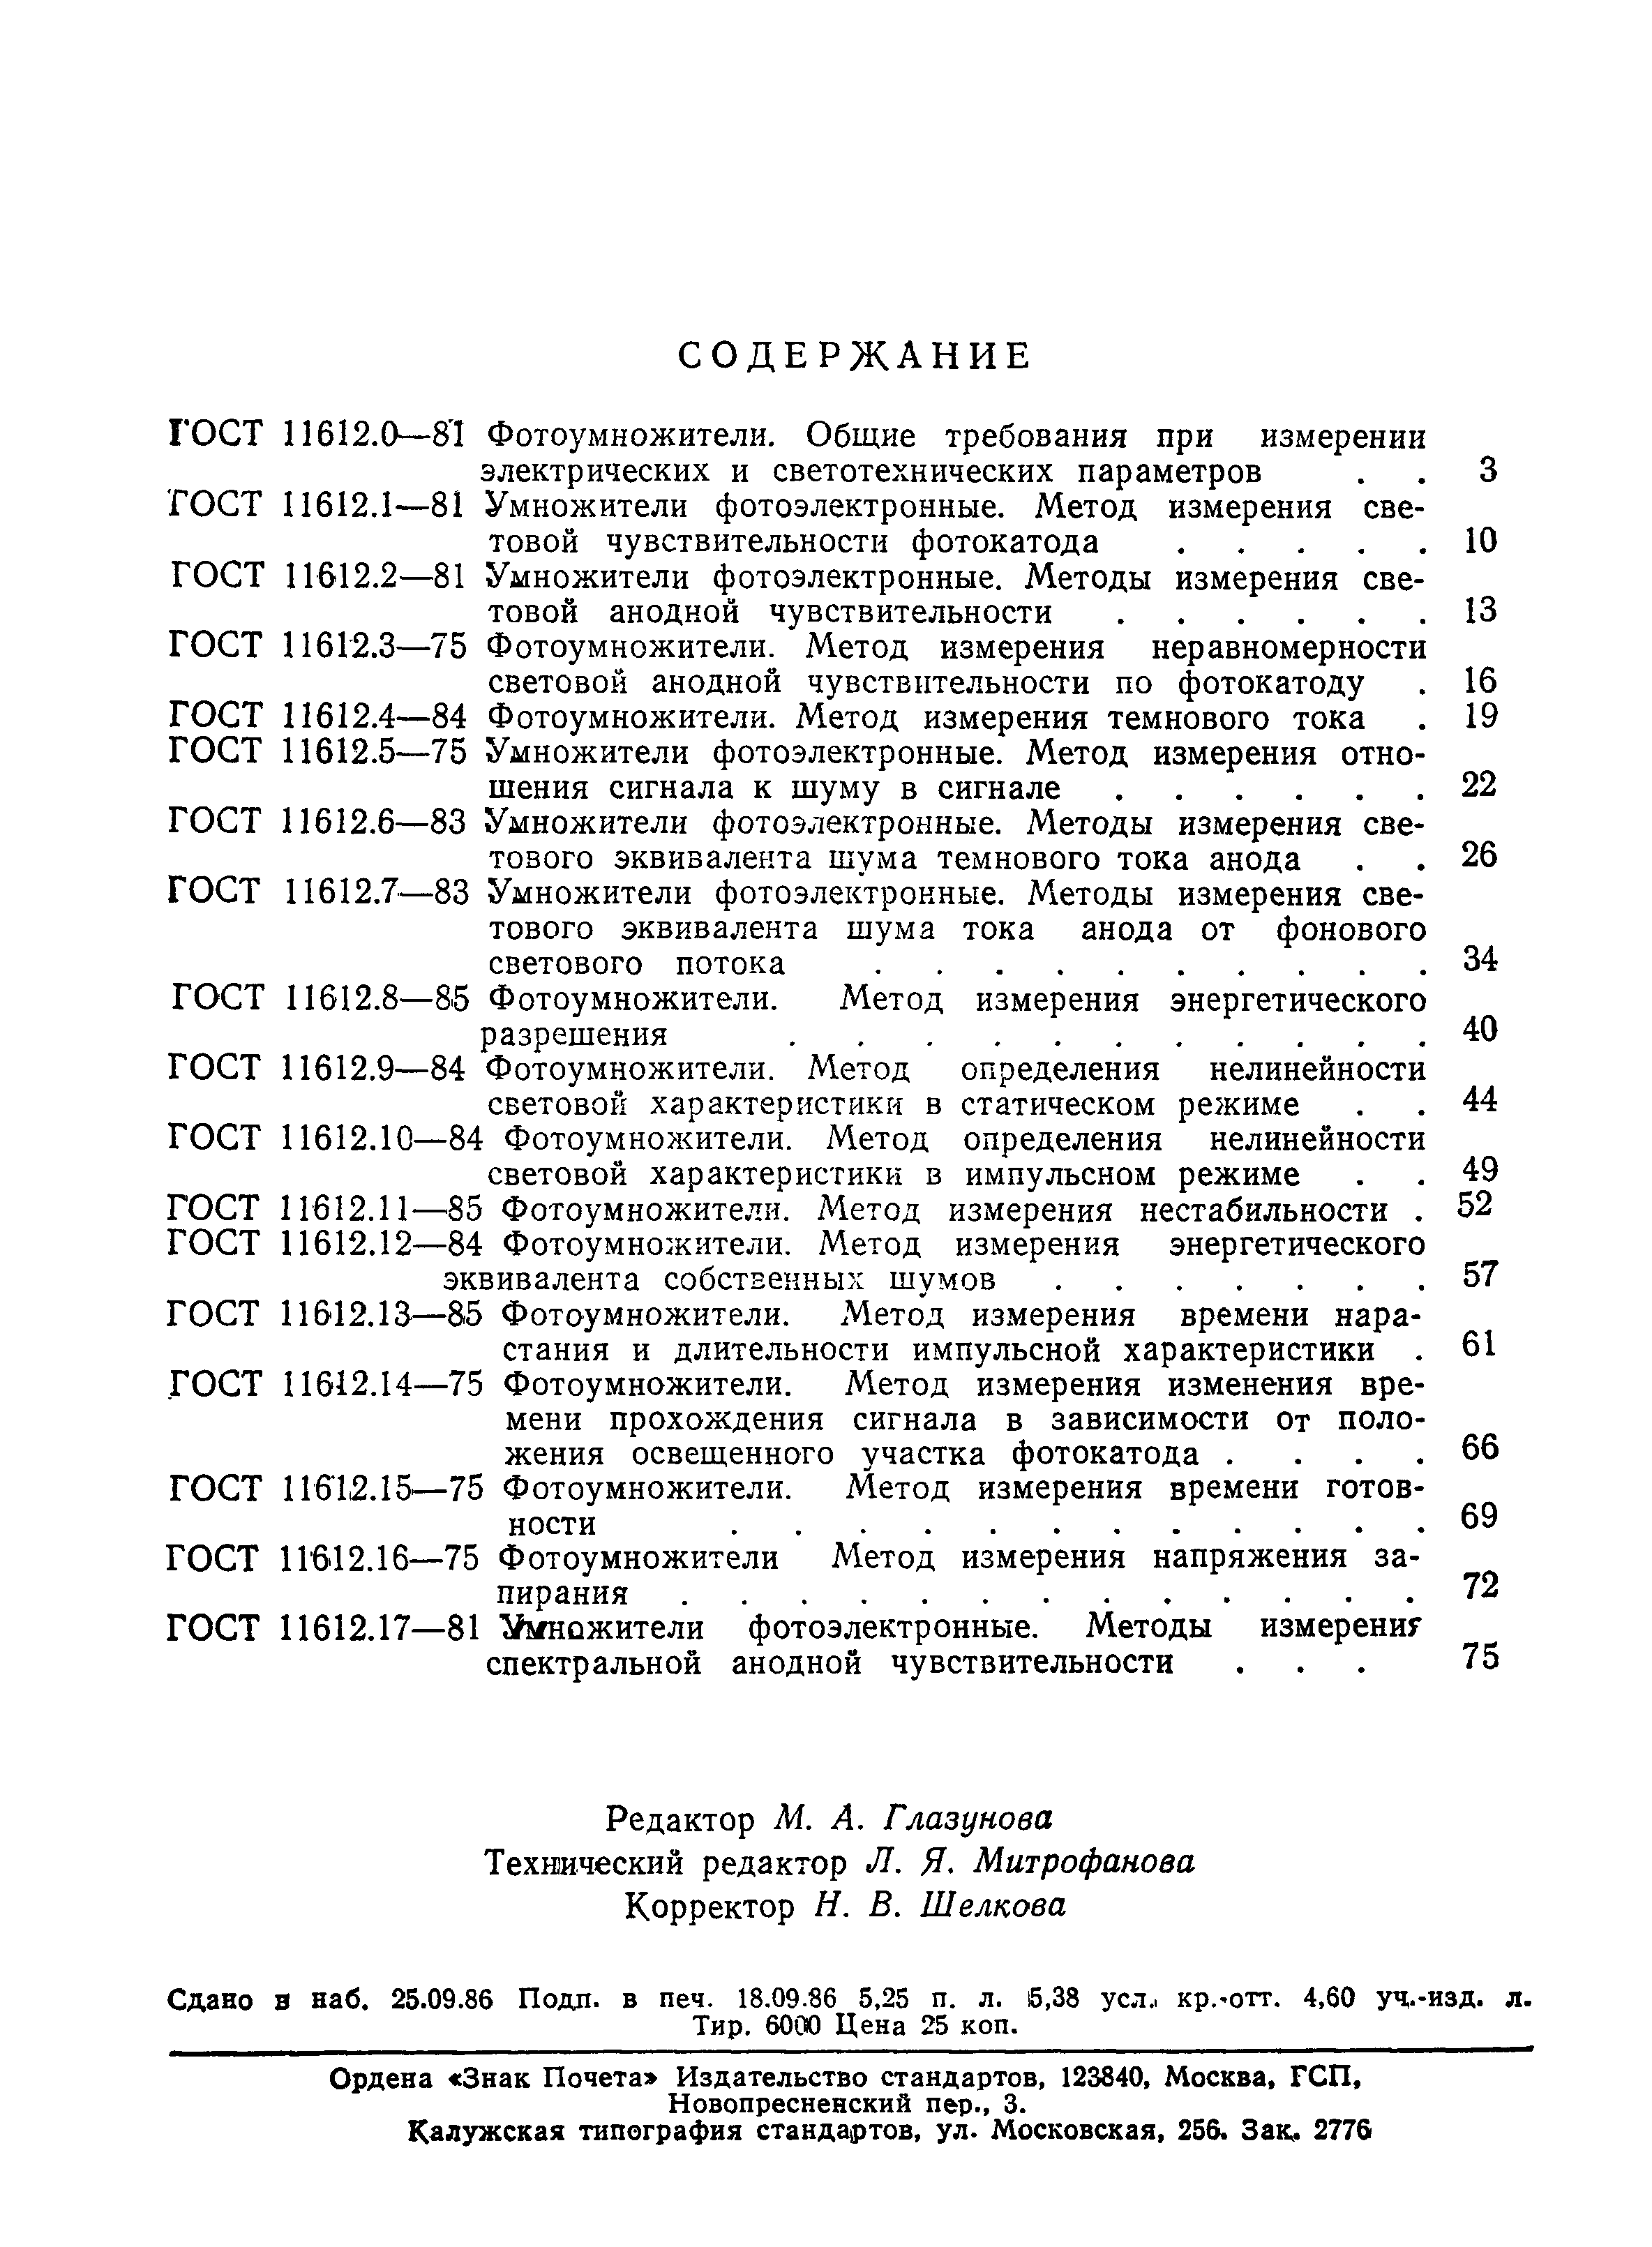 ГОСТ 11612.17-81